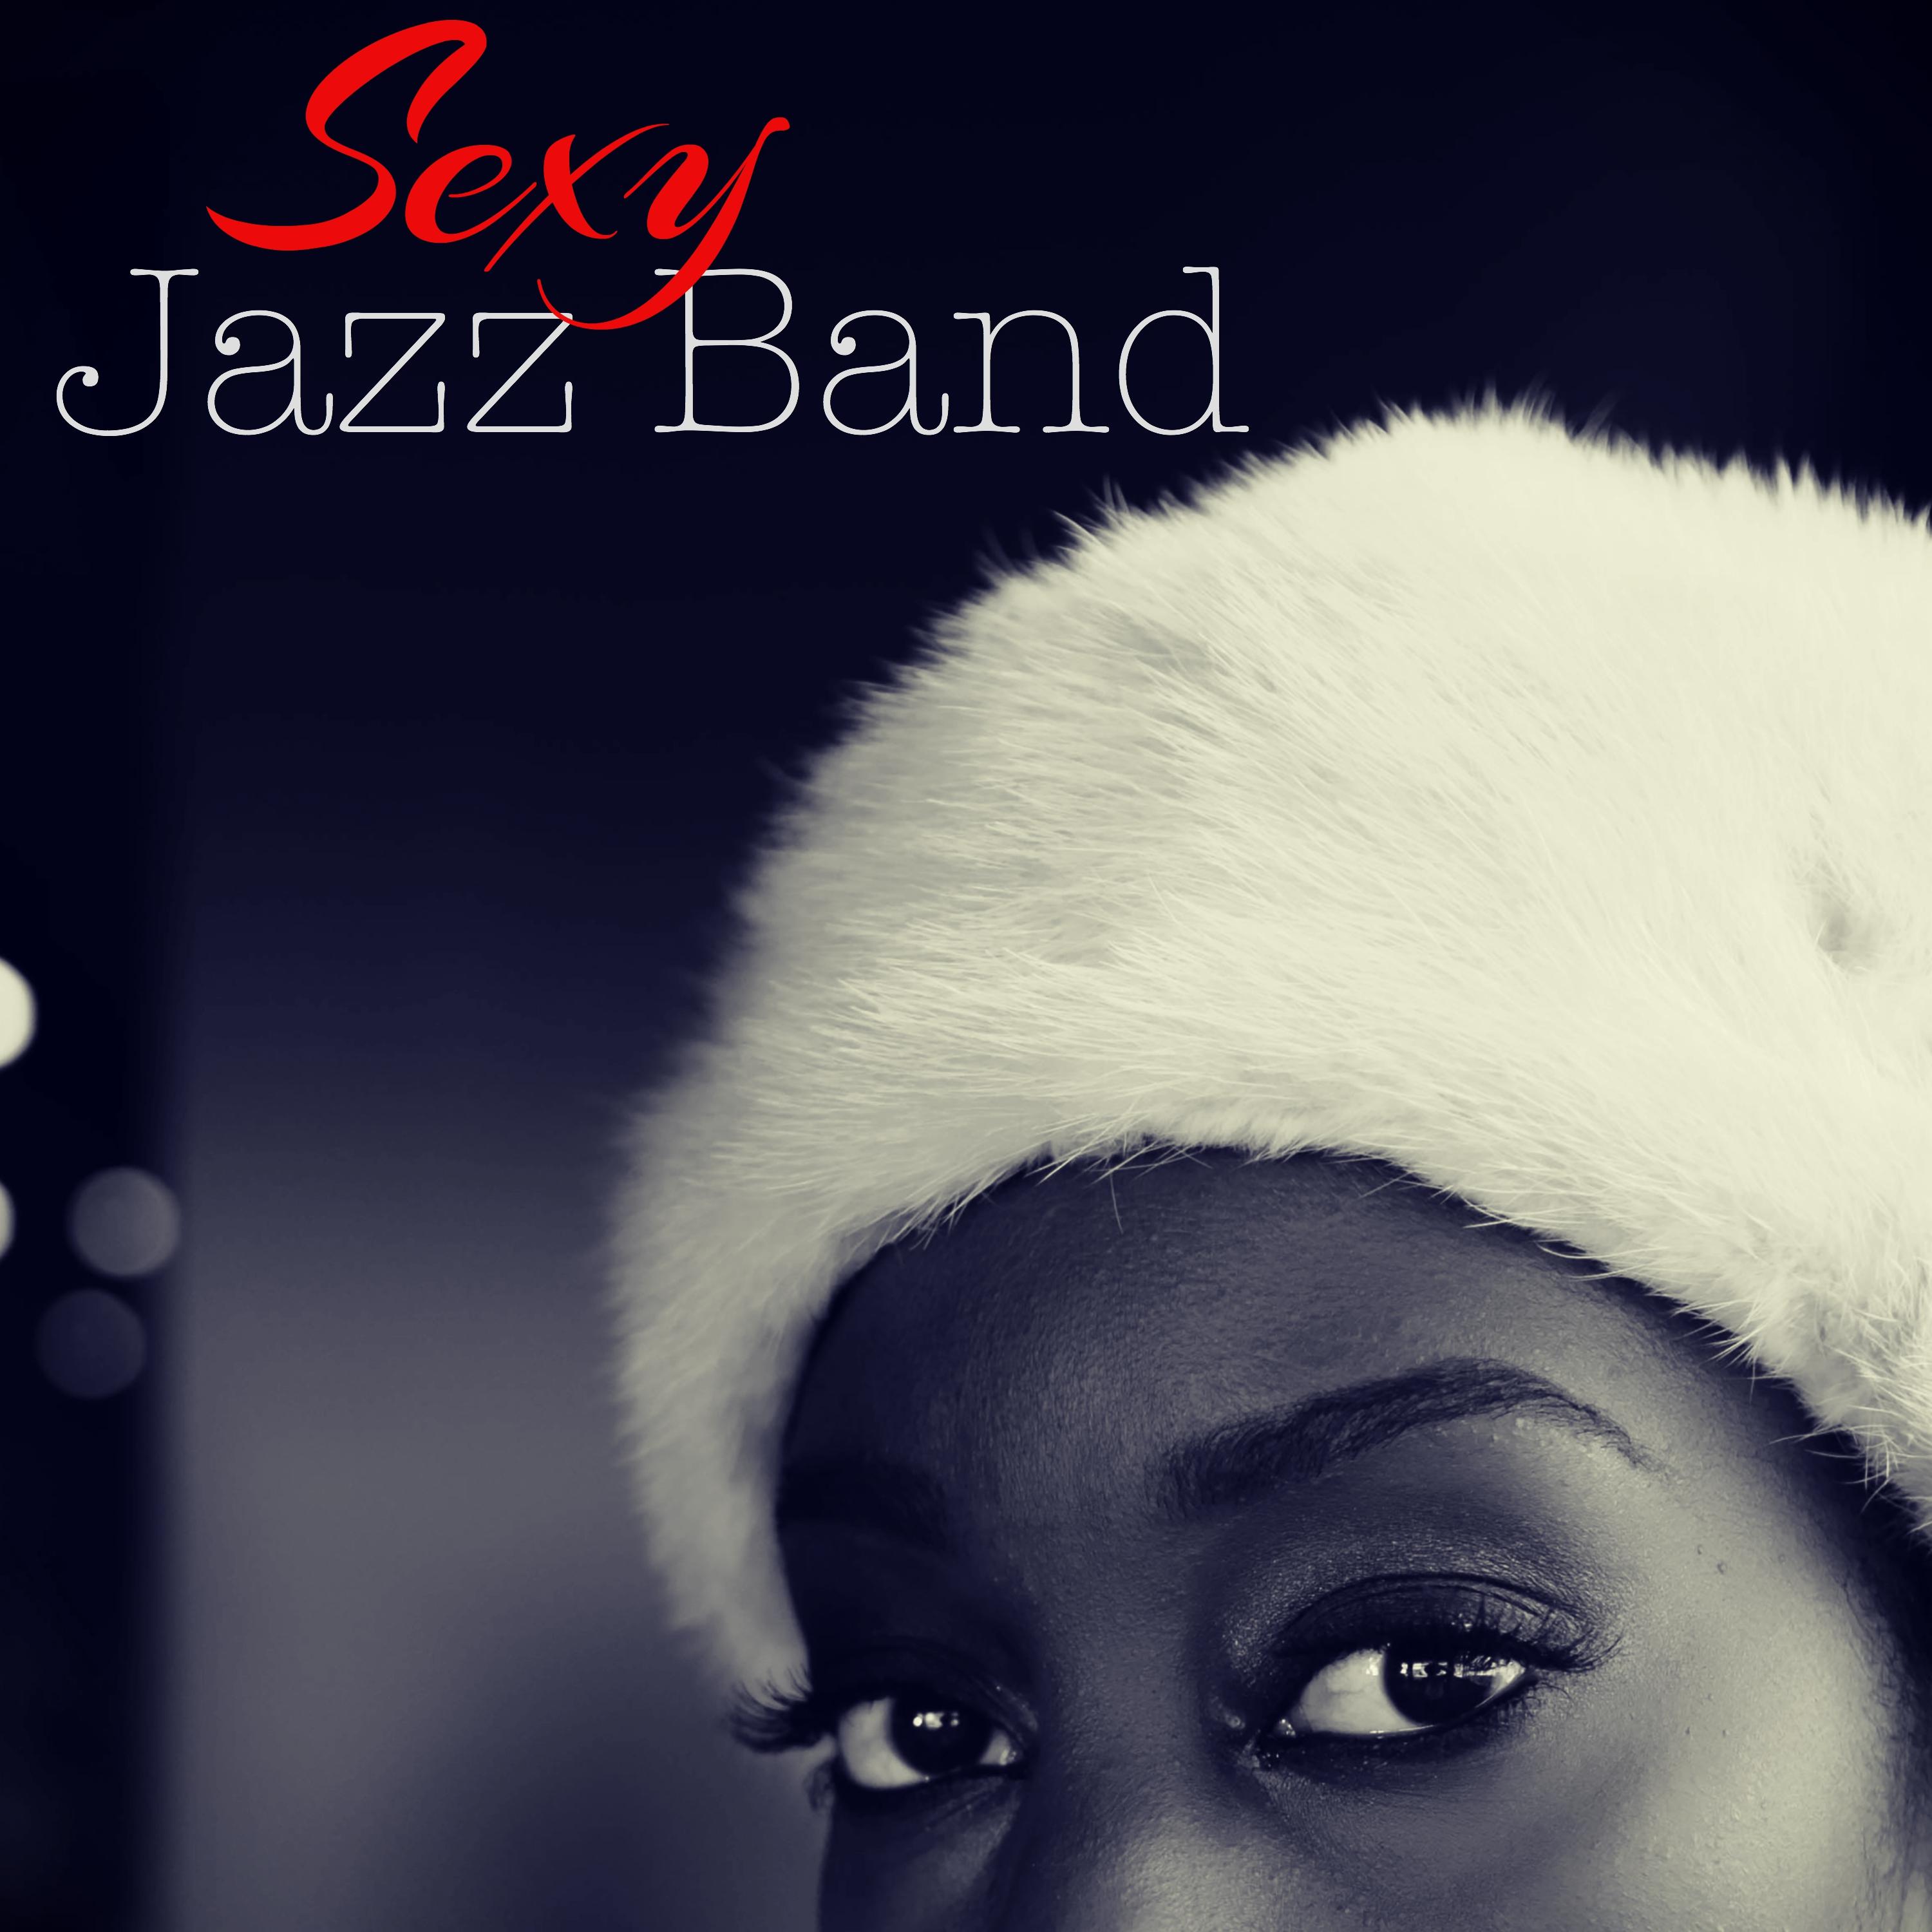 The Jazz Band